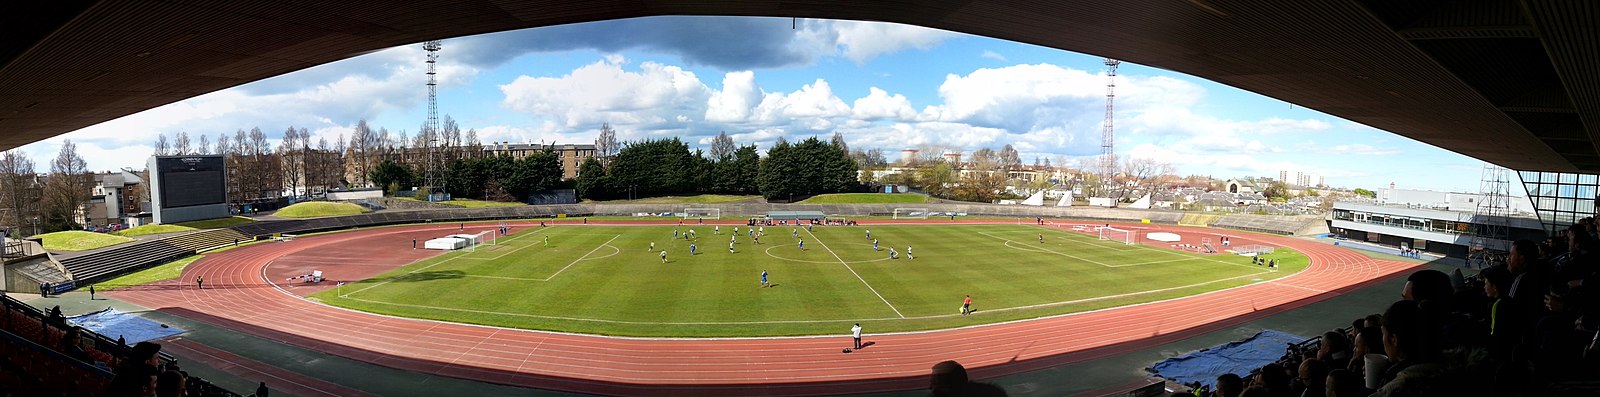 Meadowbank Stadium panorama.jpg